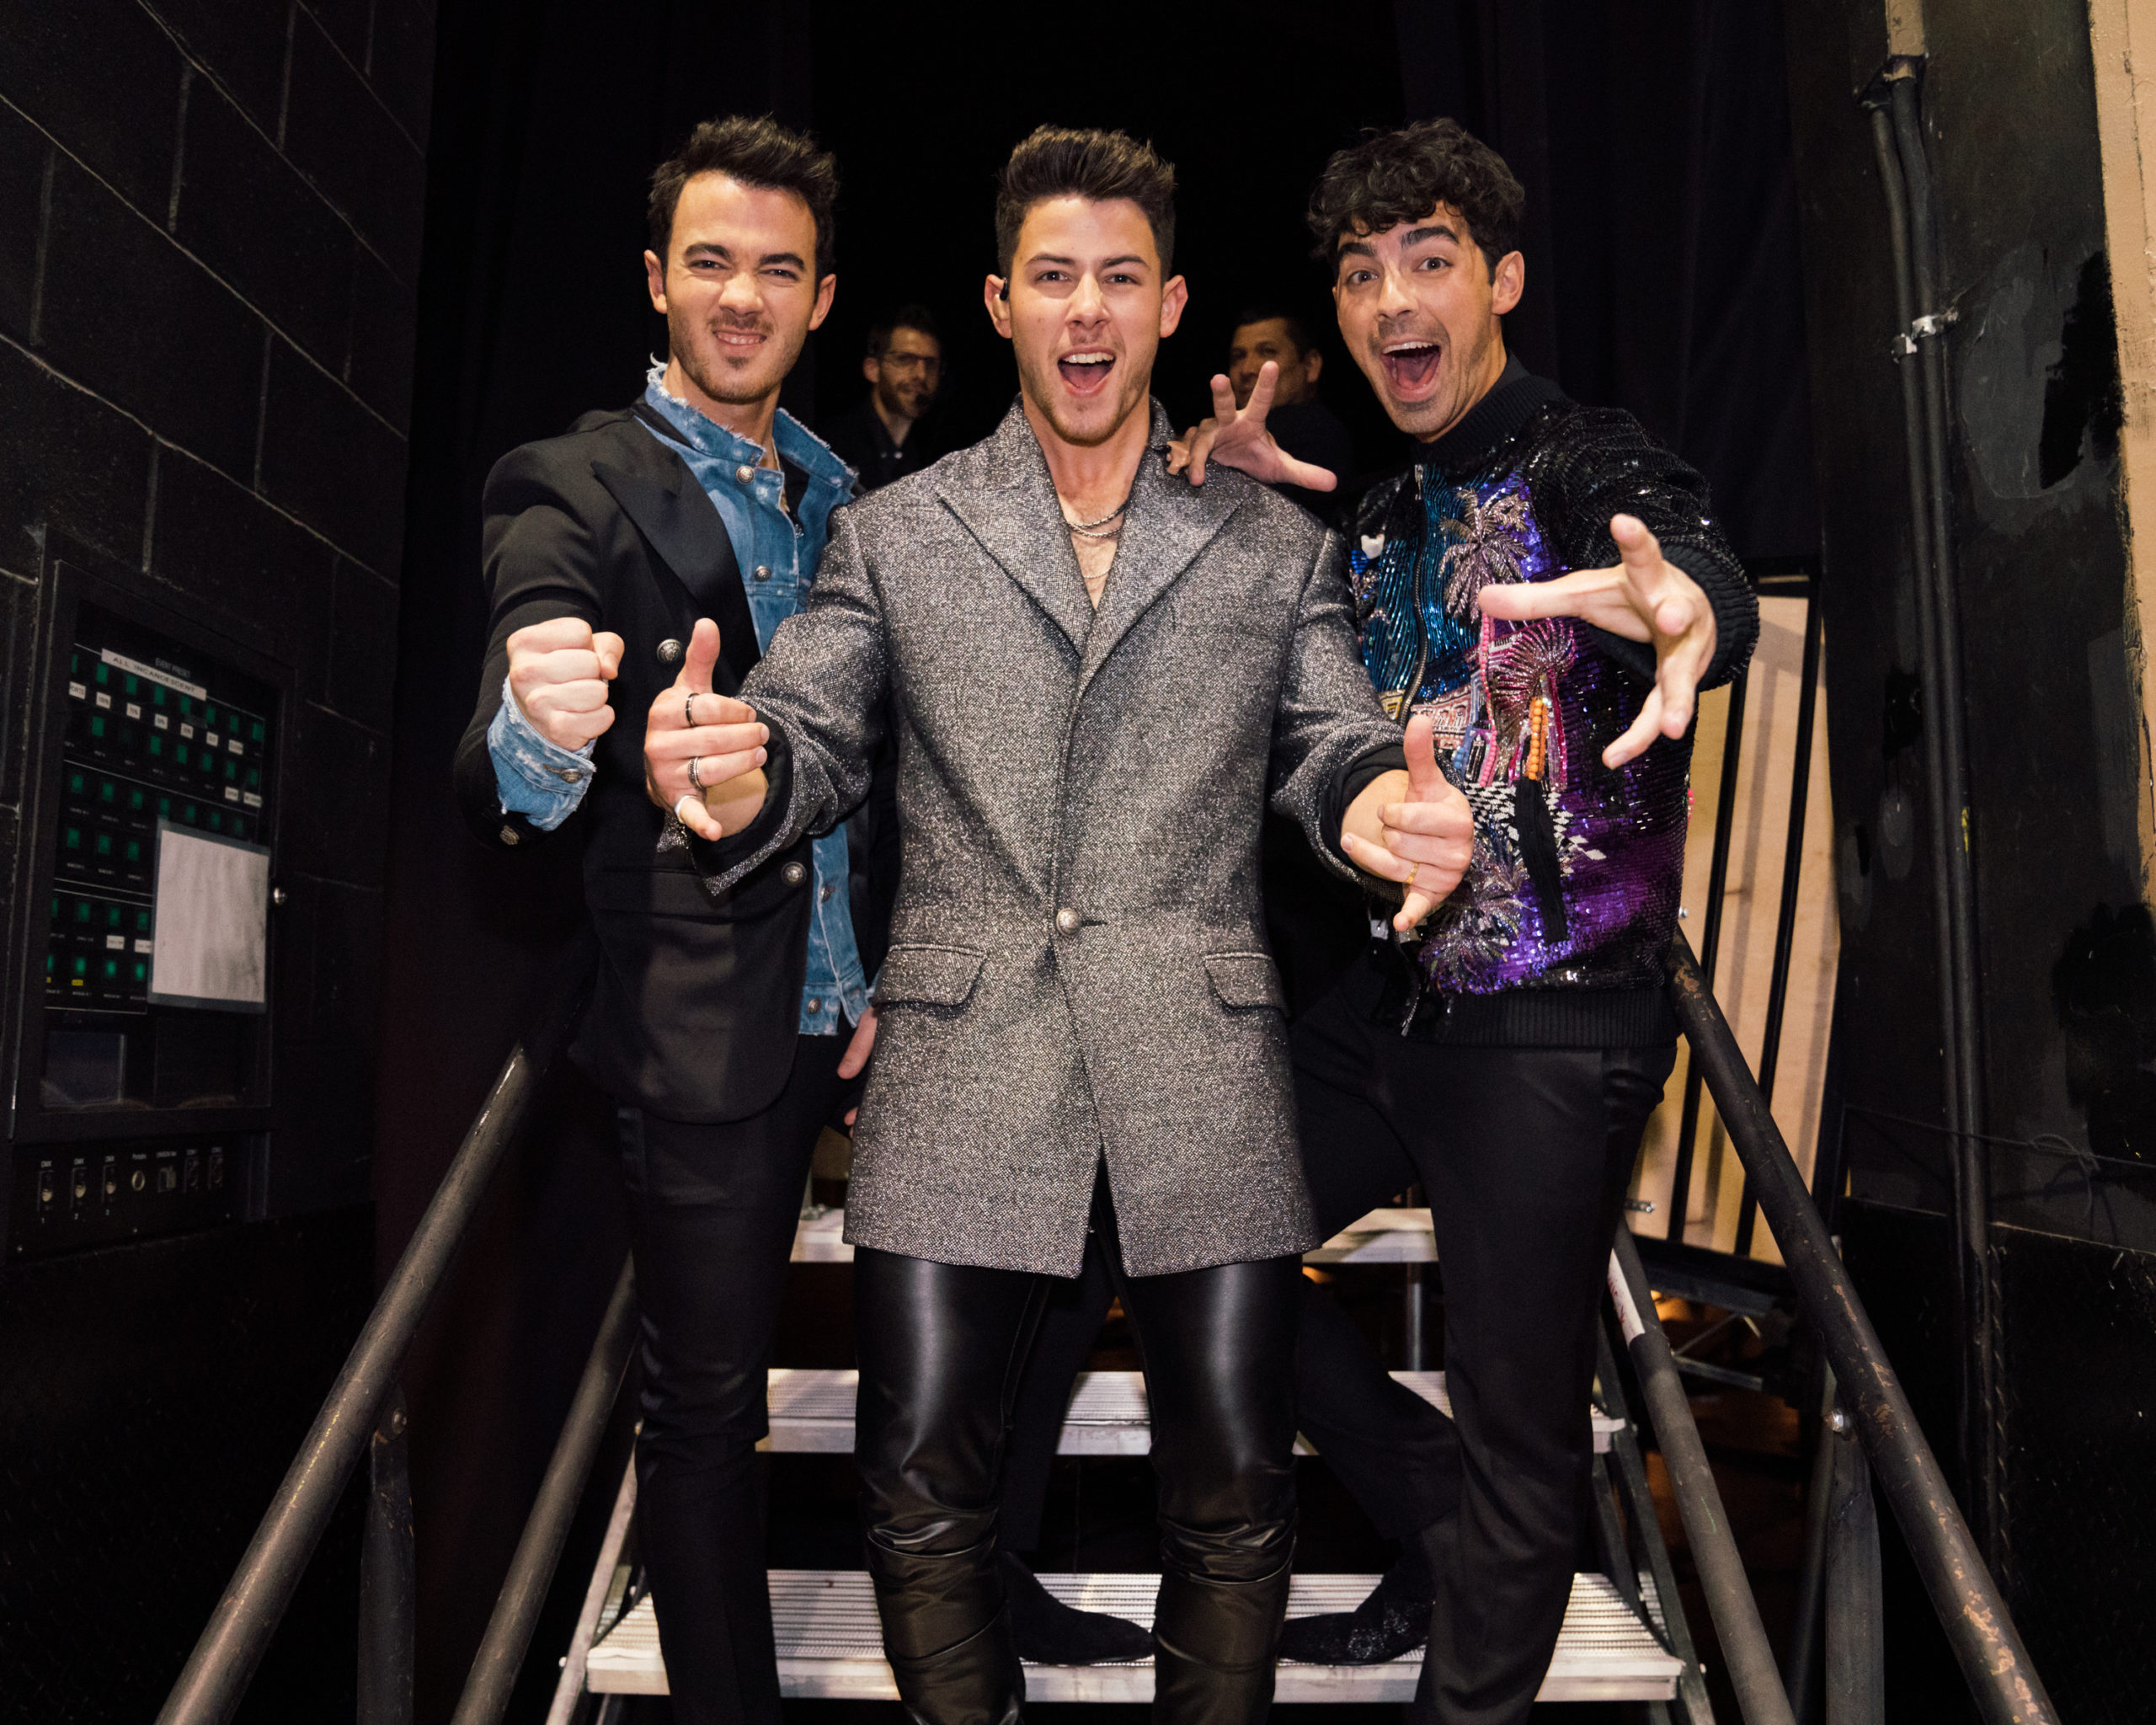 Jonas Brothers winning award